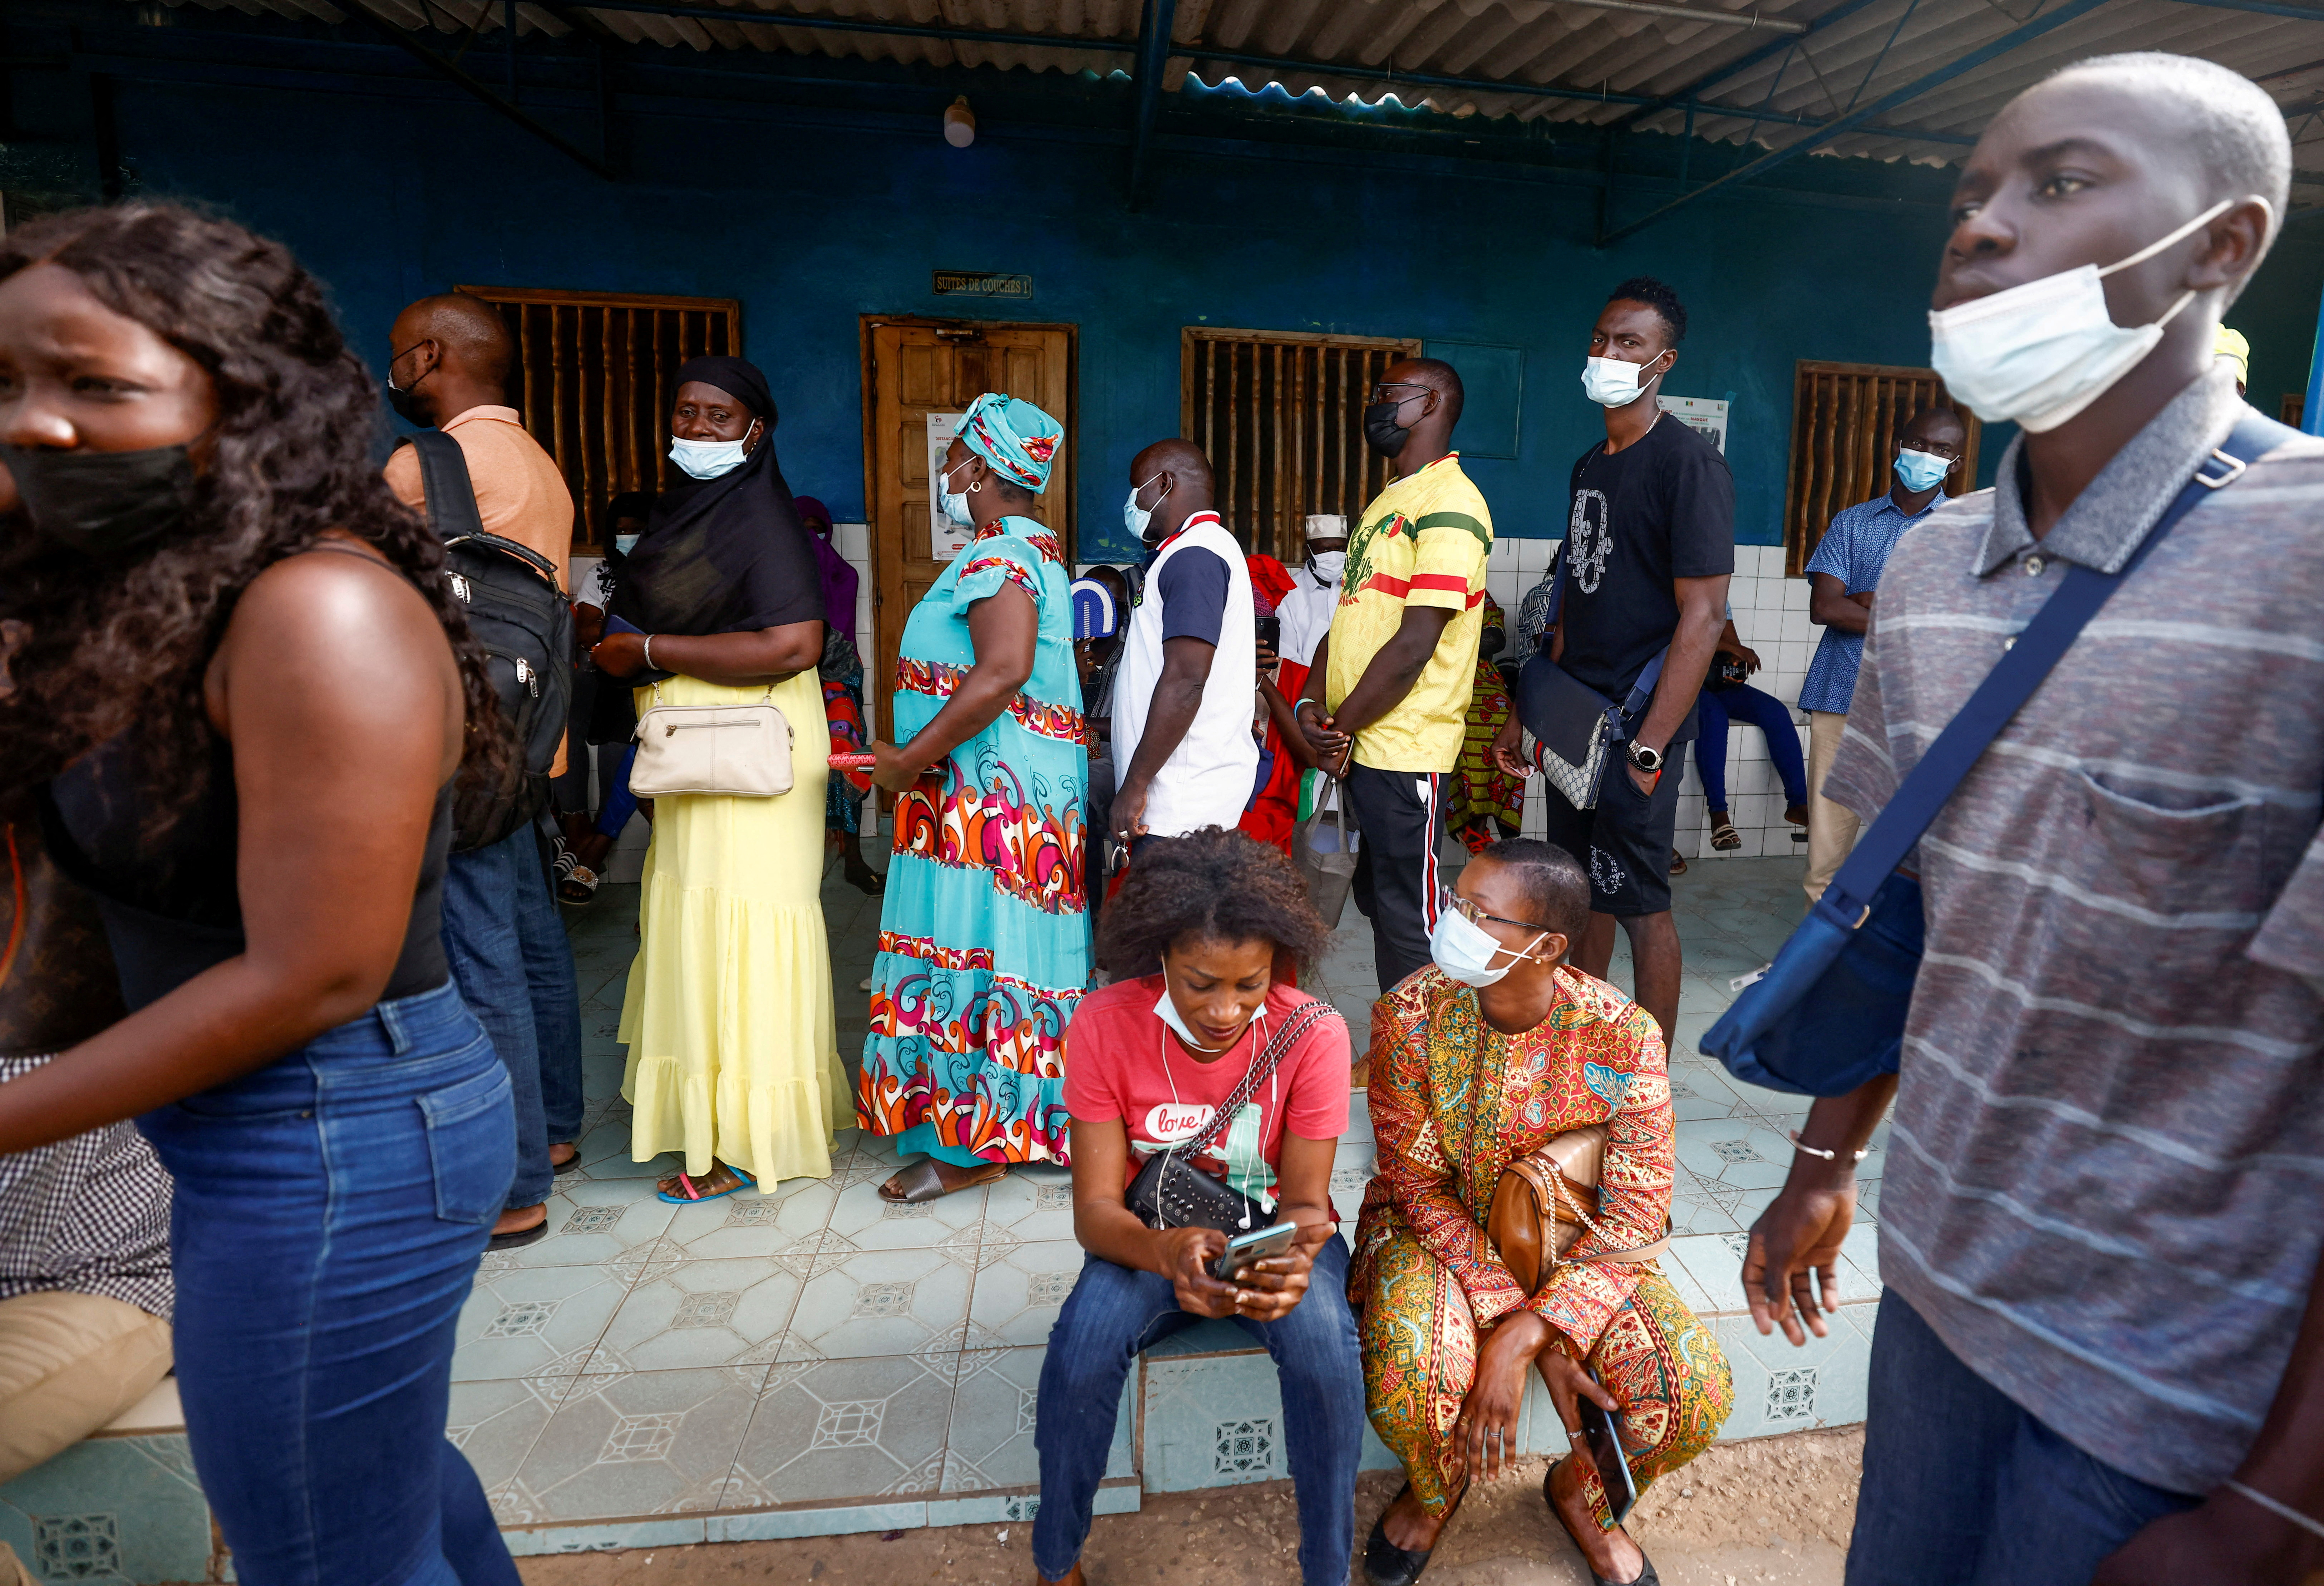 Amid a surge of coronavirus disease (COVID-19) cases in Senegal